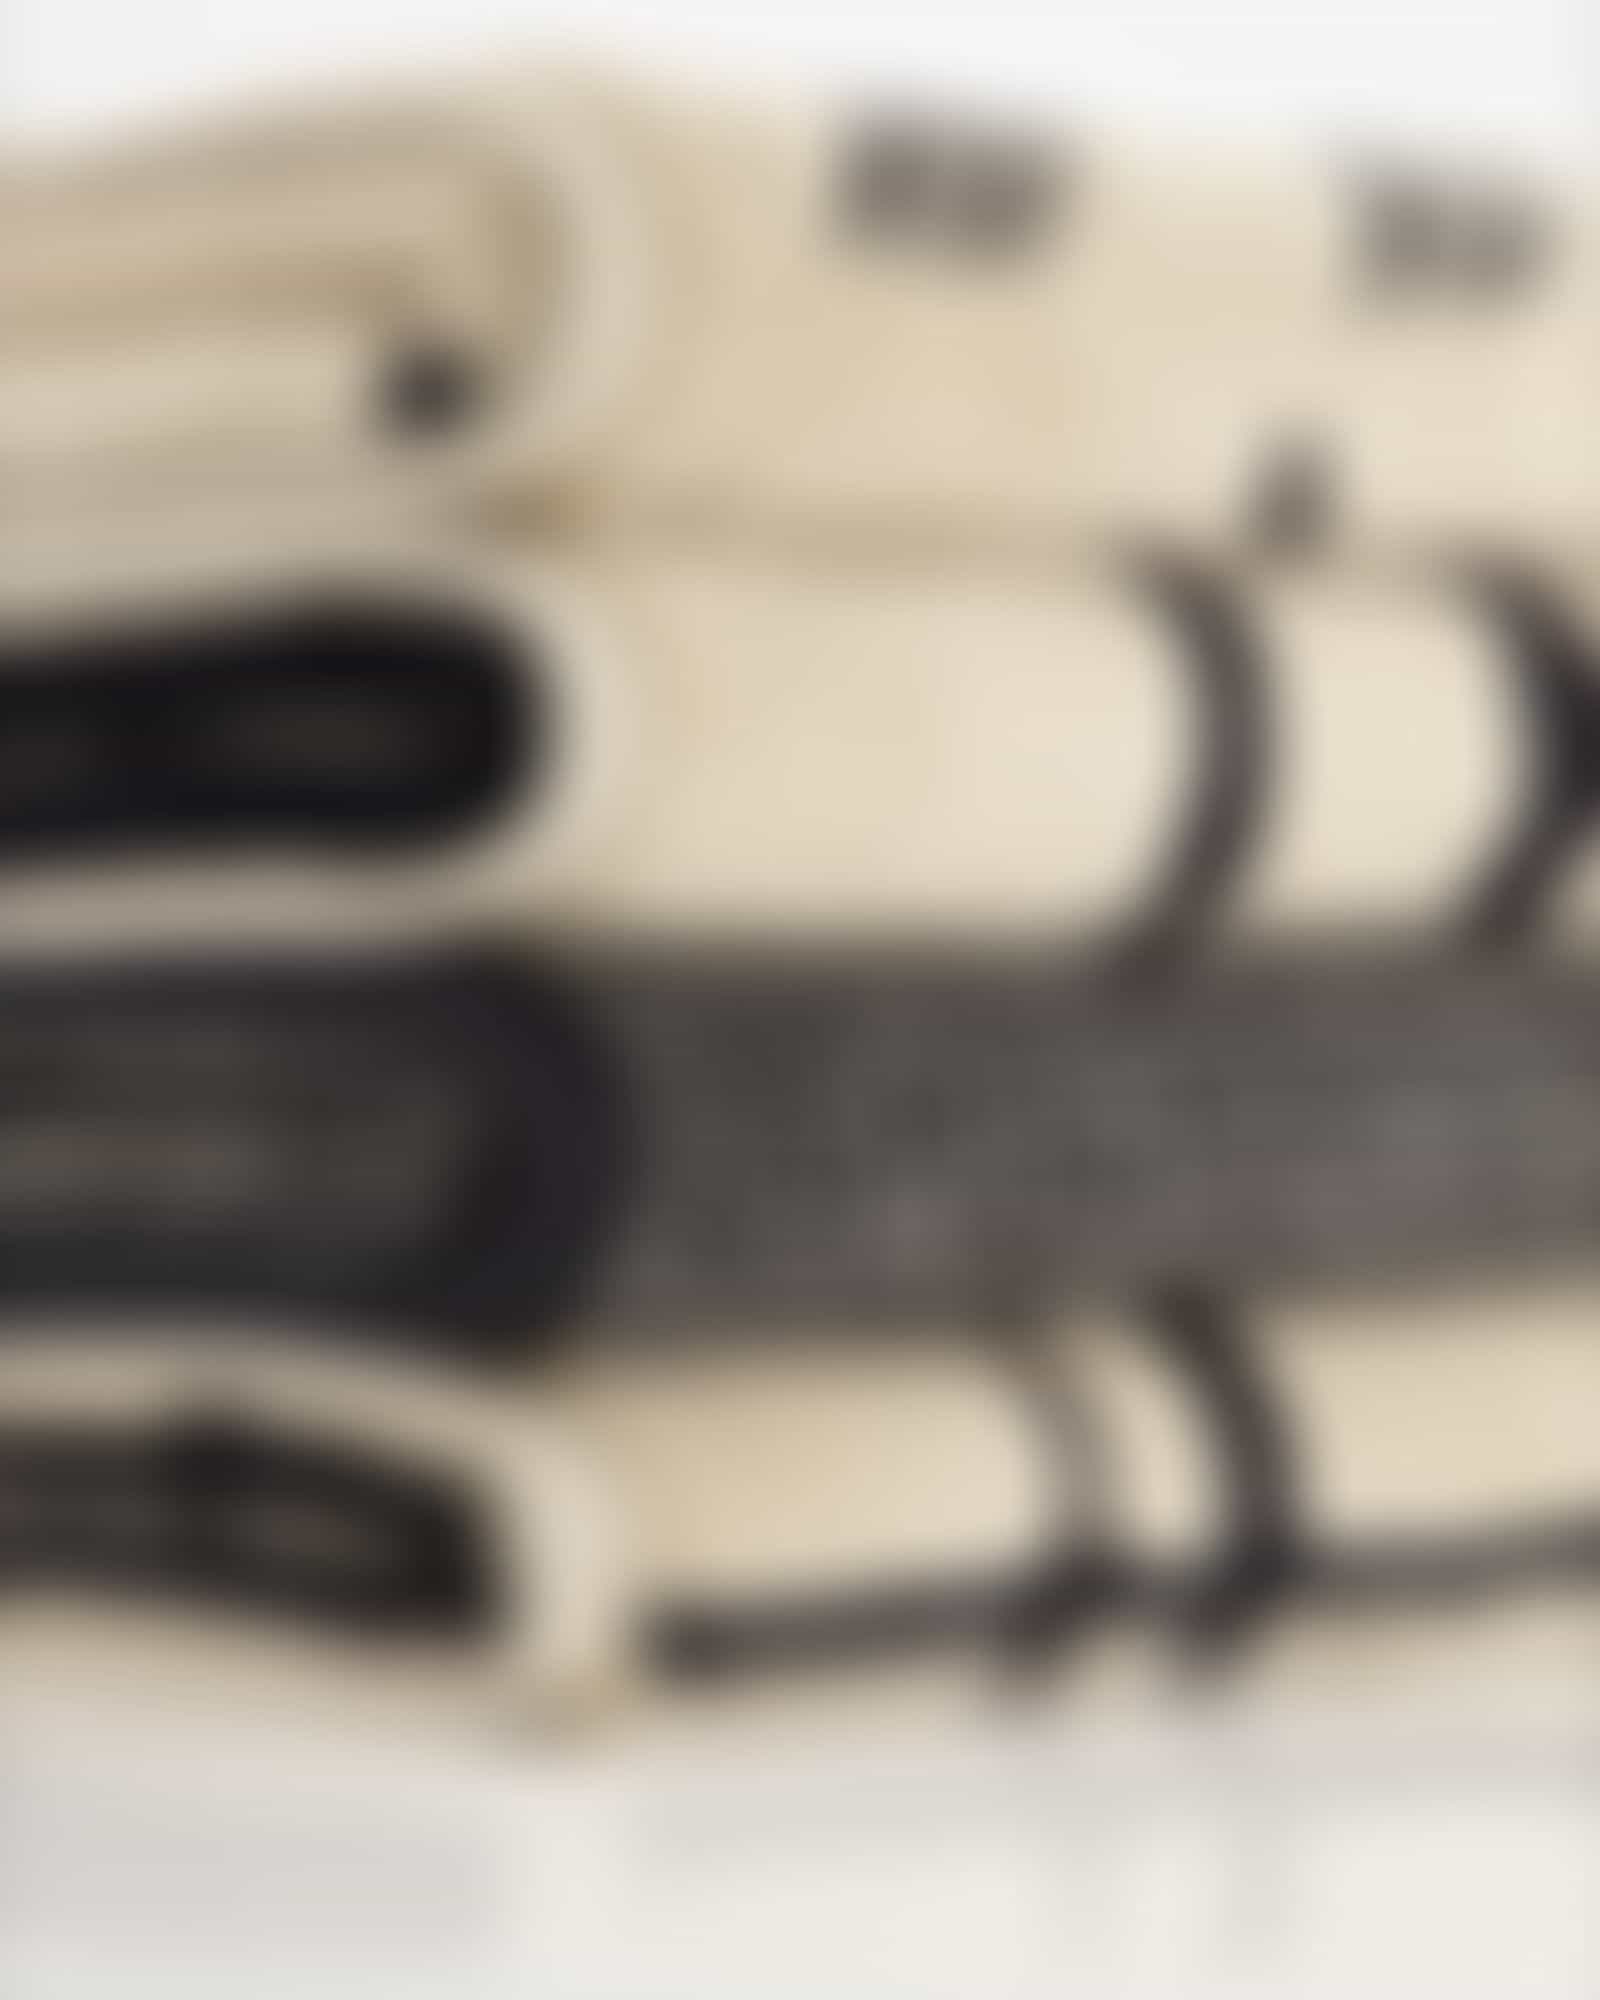 JOOP! Handtücher Select Allover 1695 - Farbe: ebony - 39 - Handtuch 50x100 cm